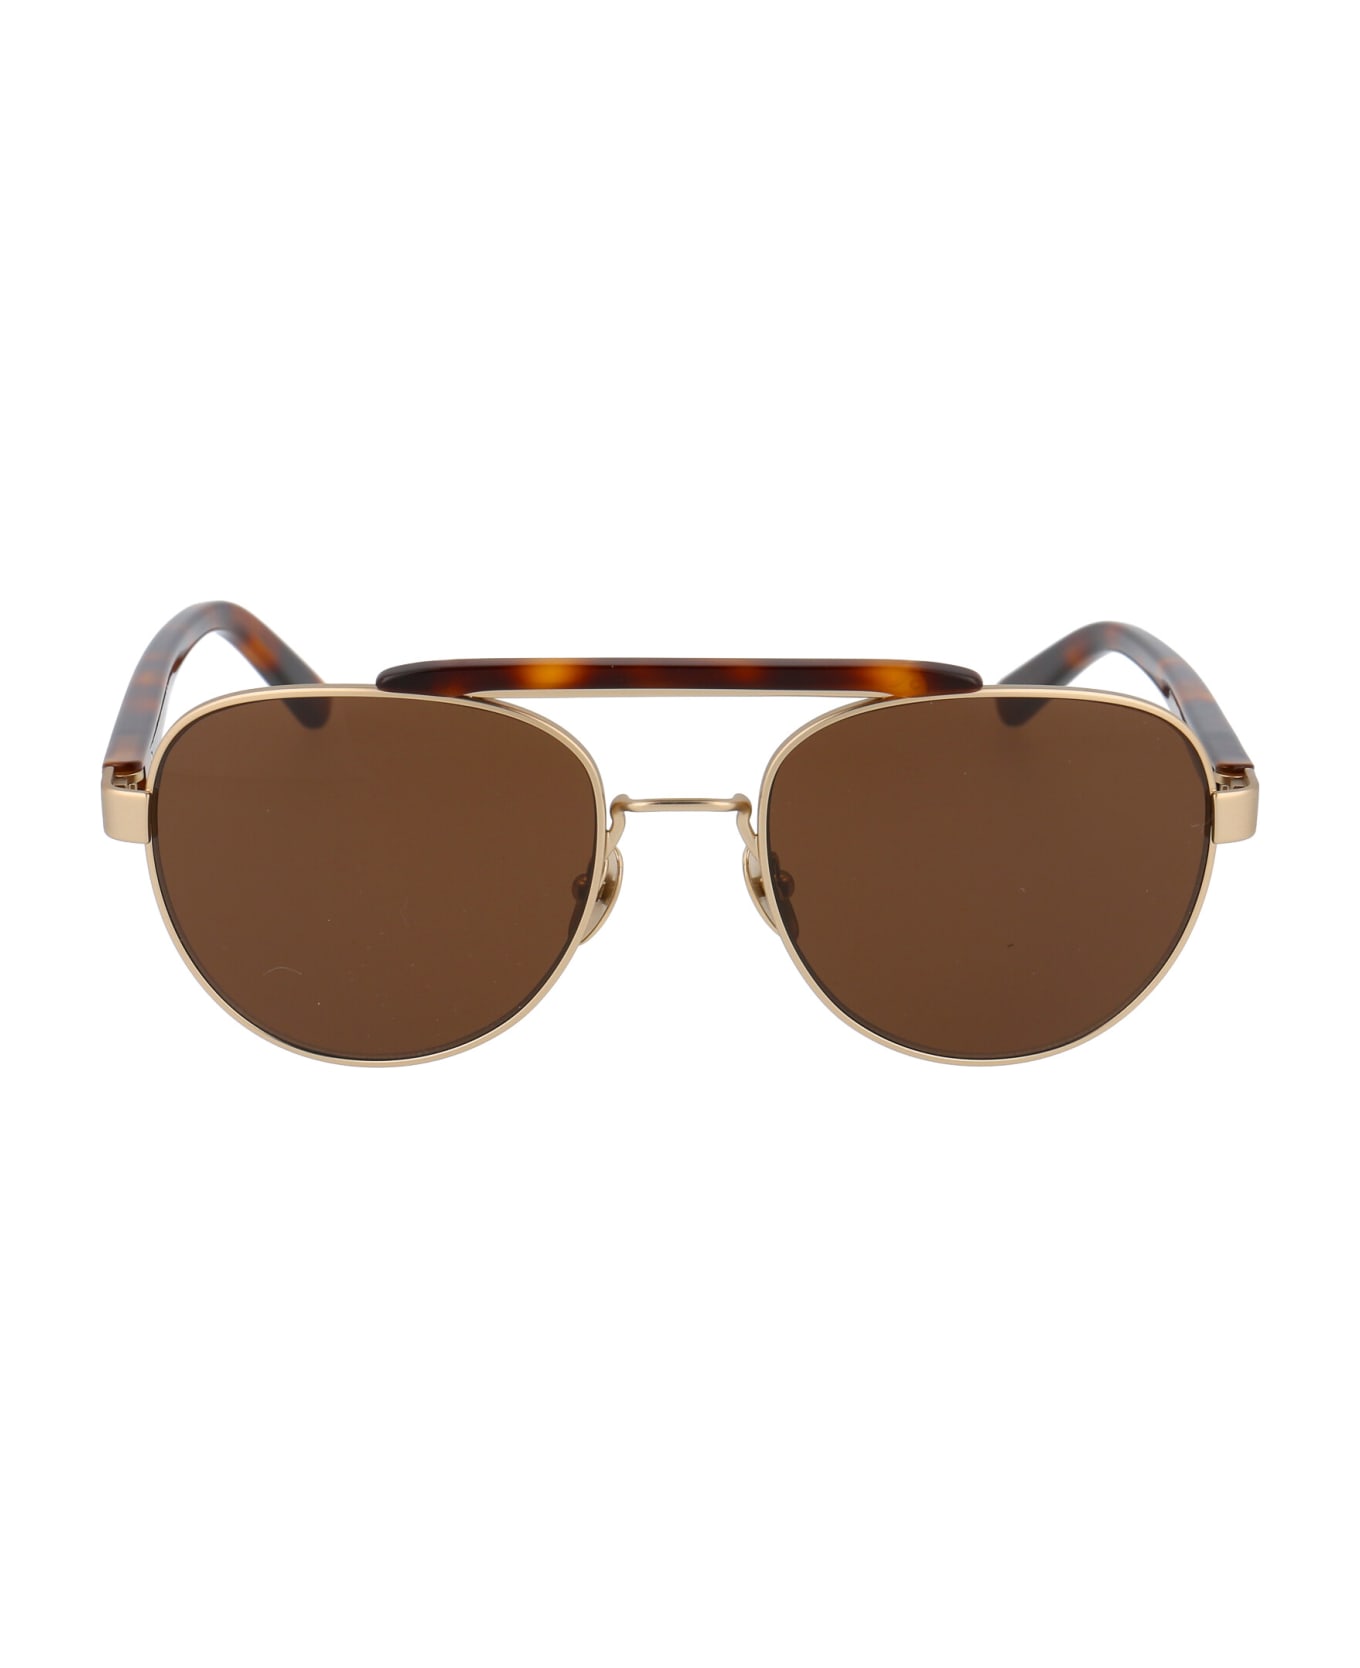 Calvin Klein Ck19306s Sunglasses - 240 SOFT TORTOISE